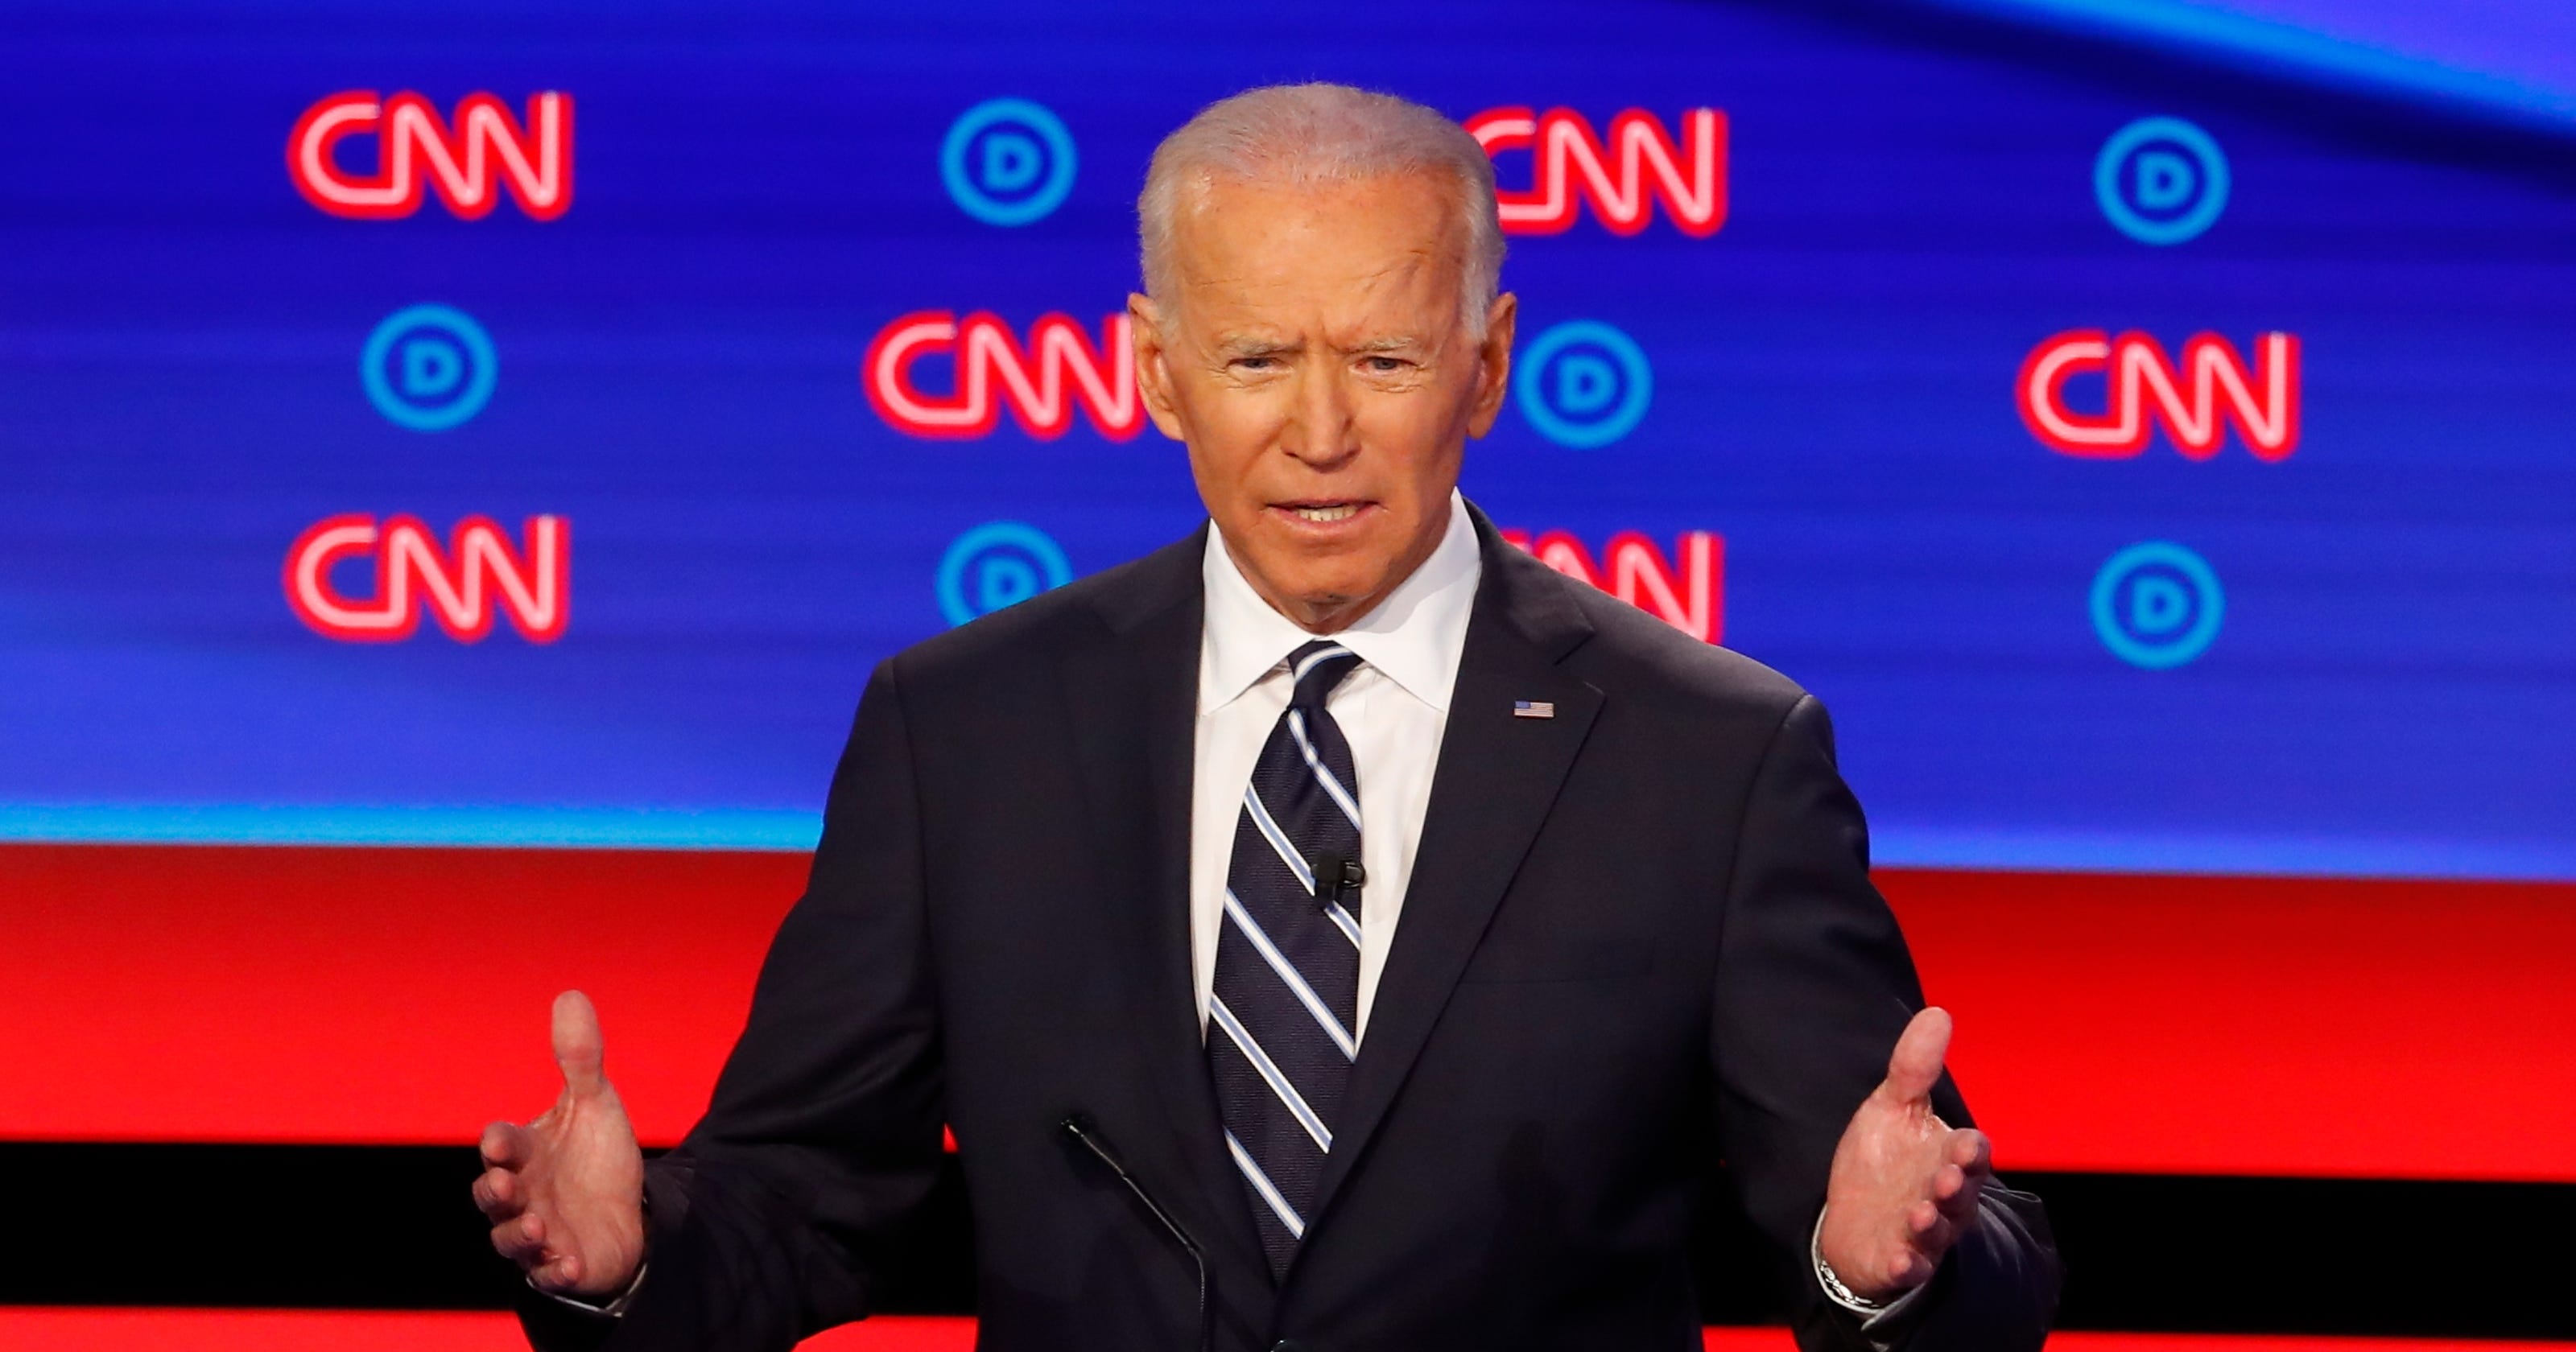 Democratic debate 2019: Joe Biden says 'malarkey' in healthcare debate